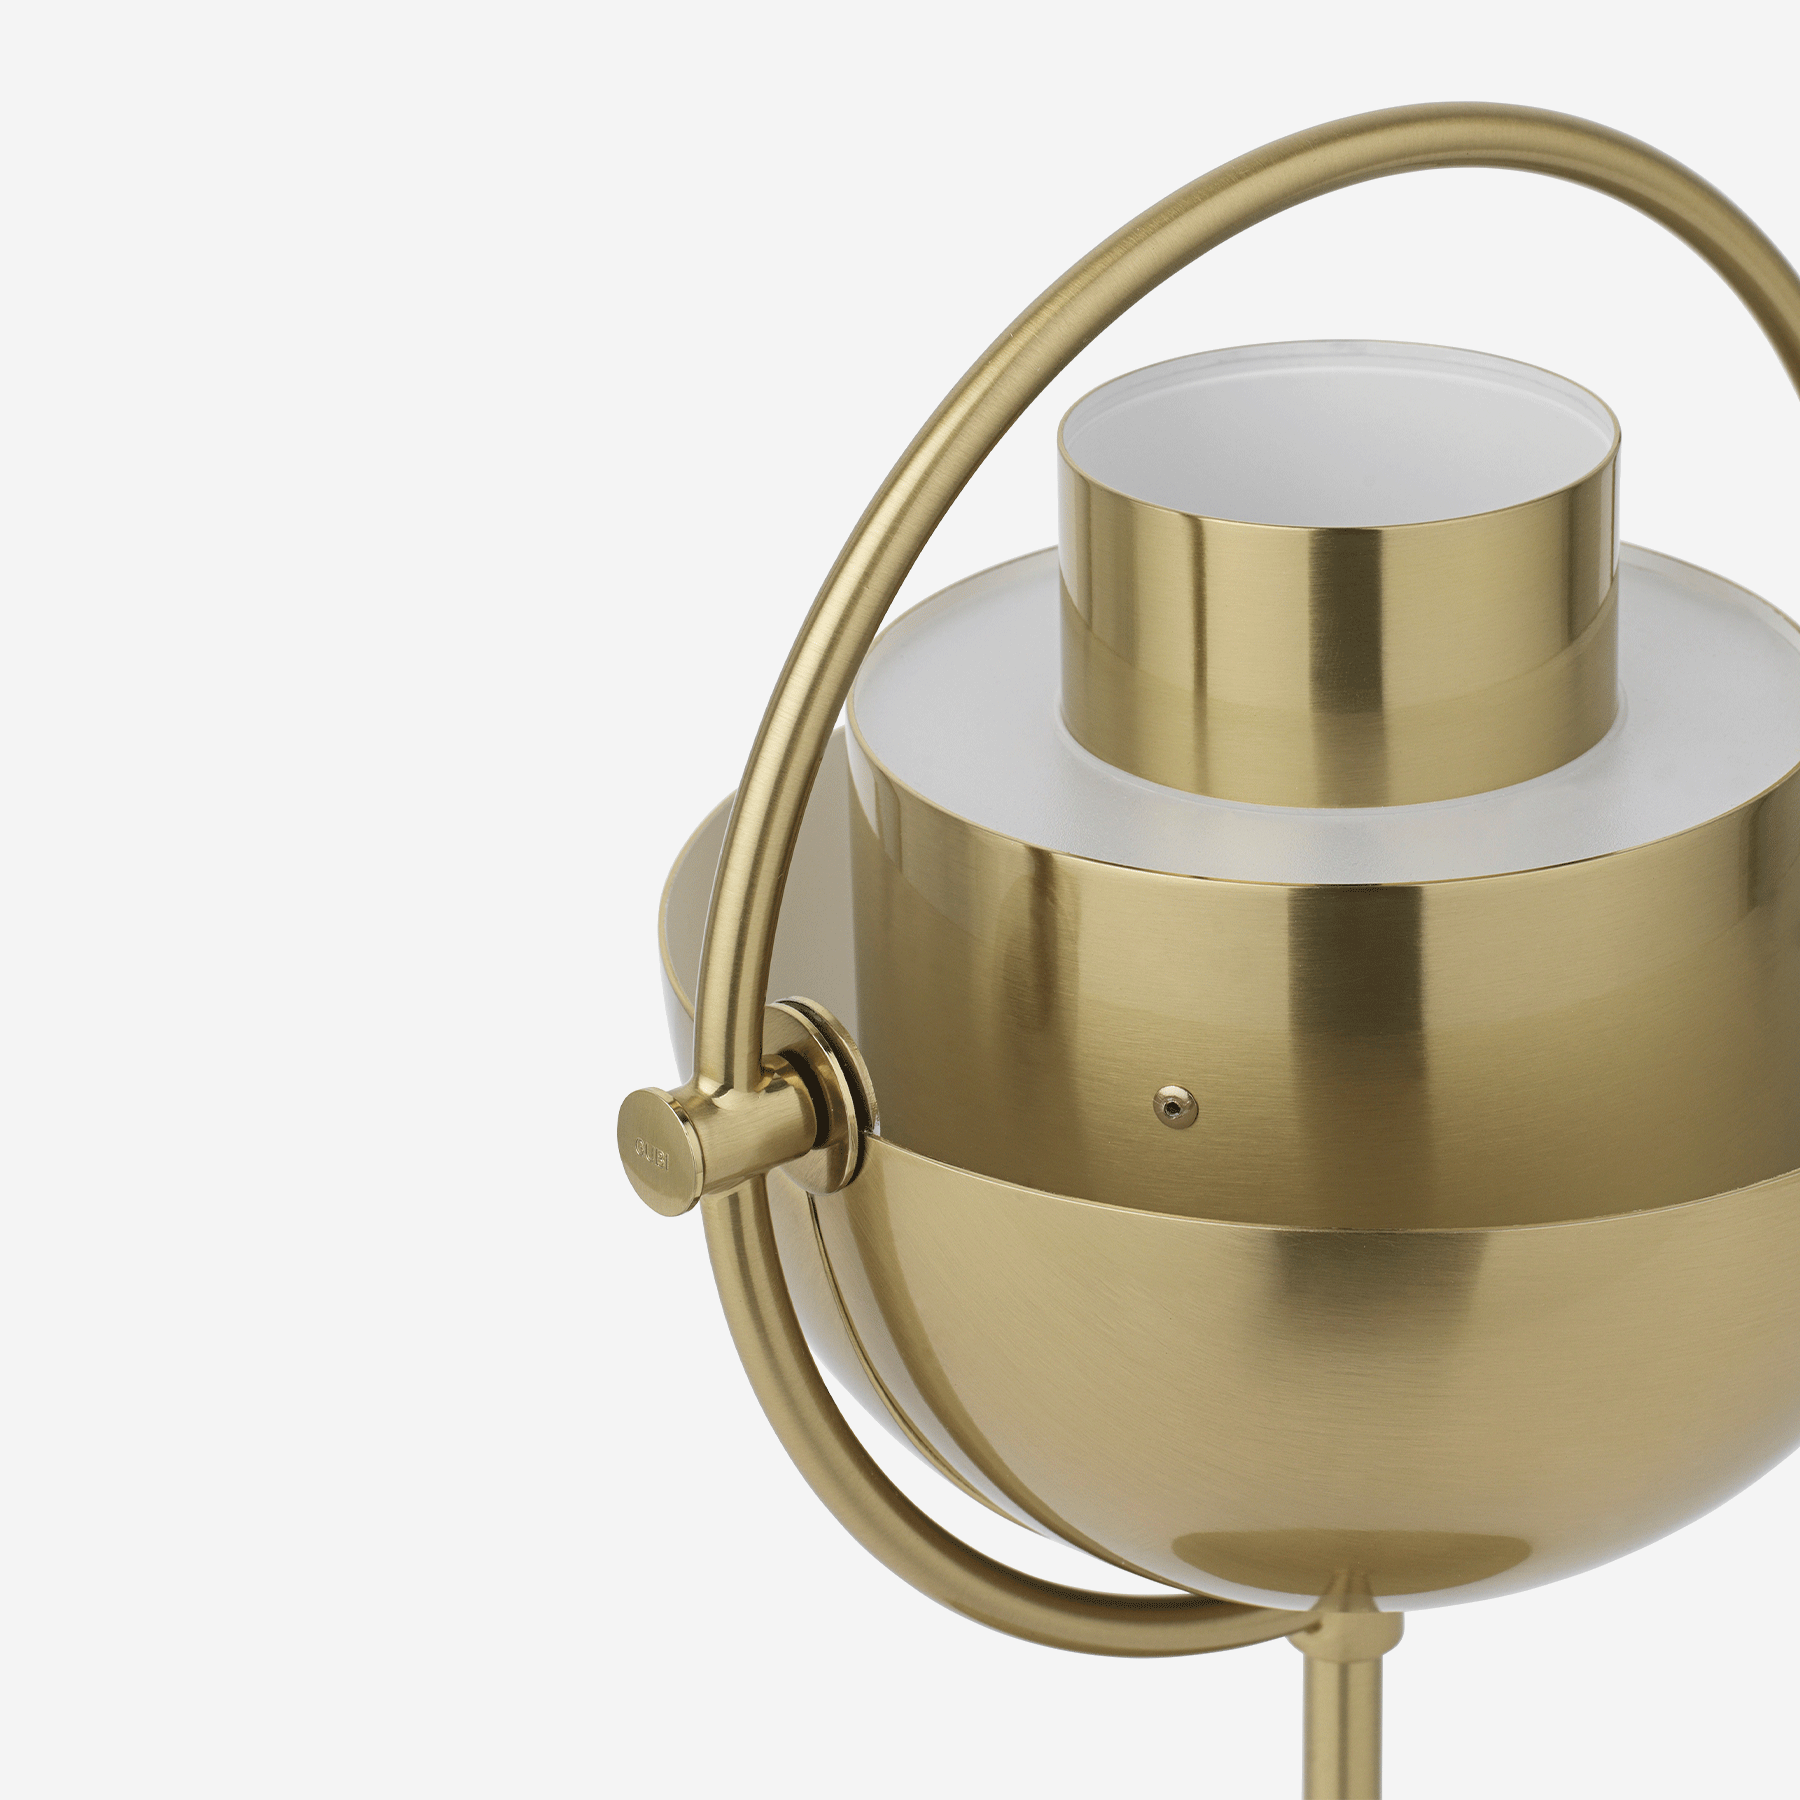 Multi-Lite Portable Lamp, Brass